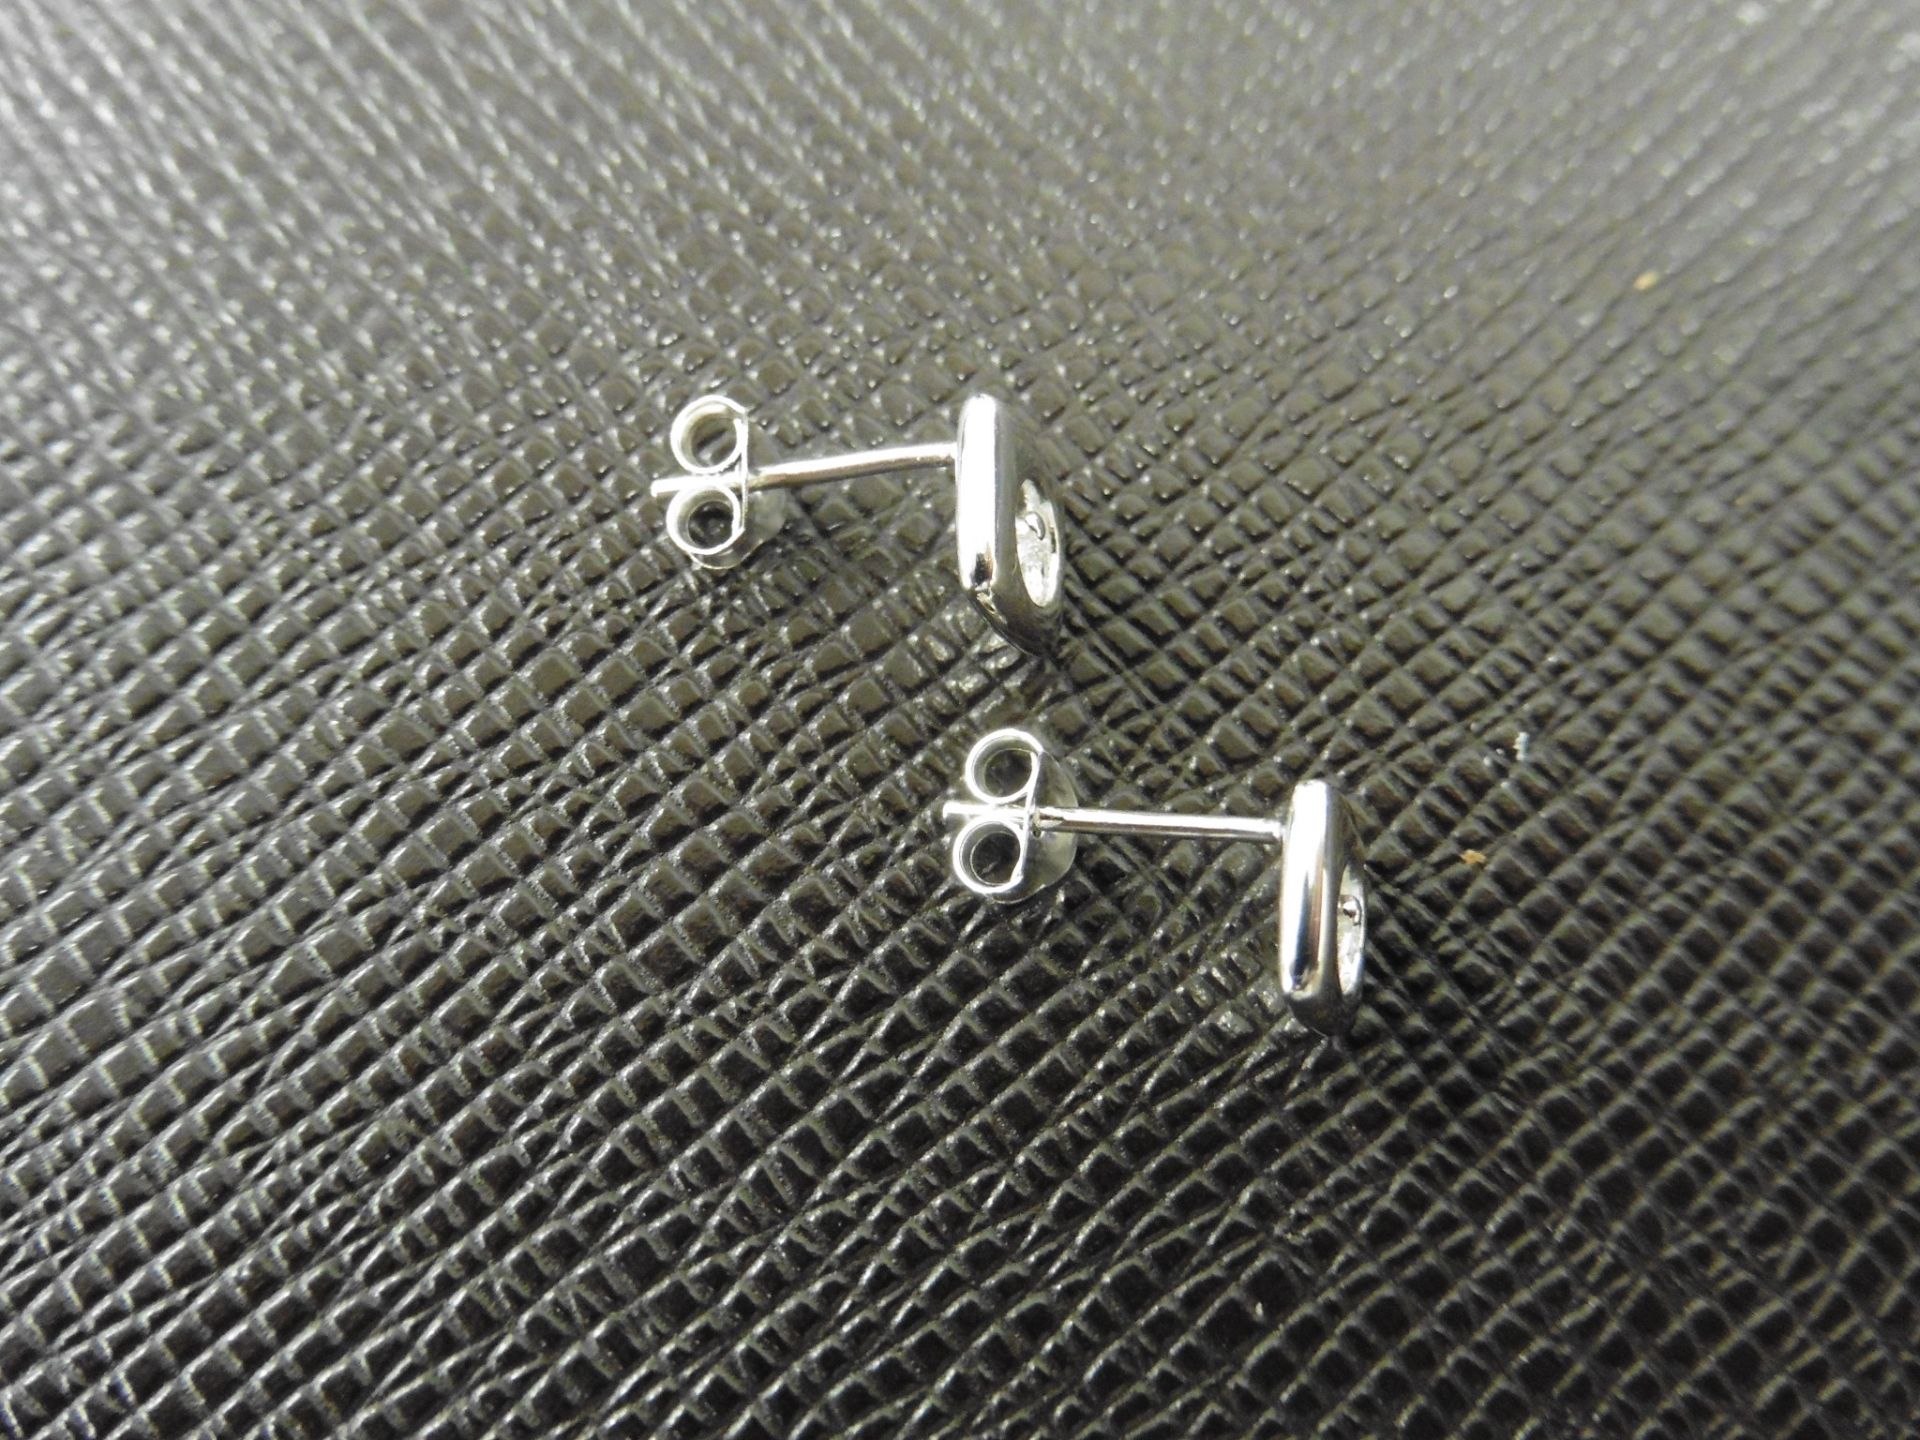 0.10ct diamond earrings set in platinum 950. 2 small brilliant cut diamonds, H colourand si2 - Image 2 of 3